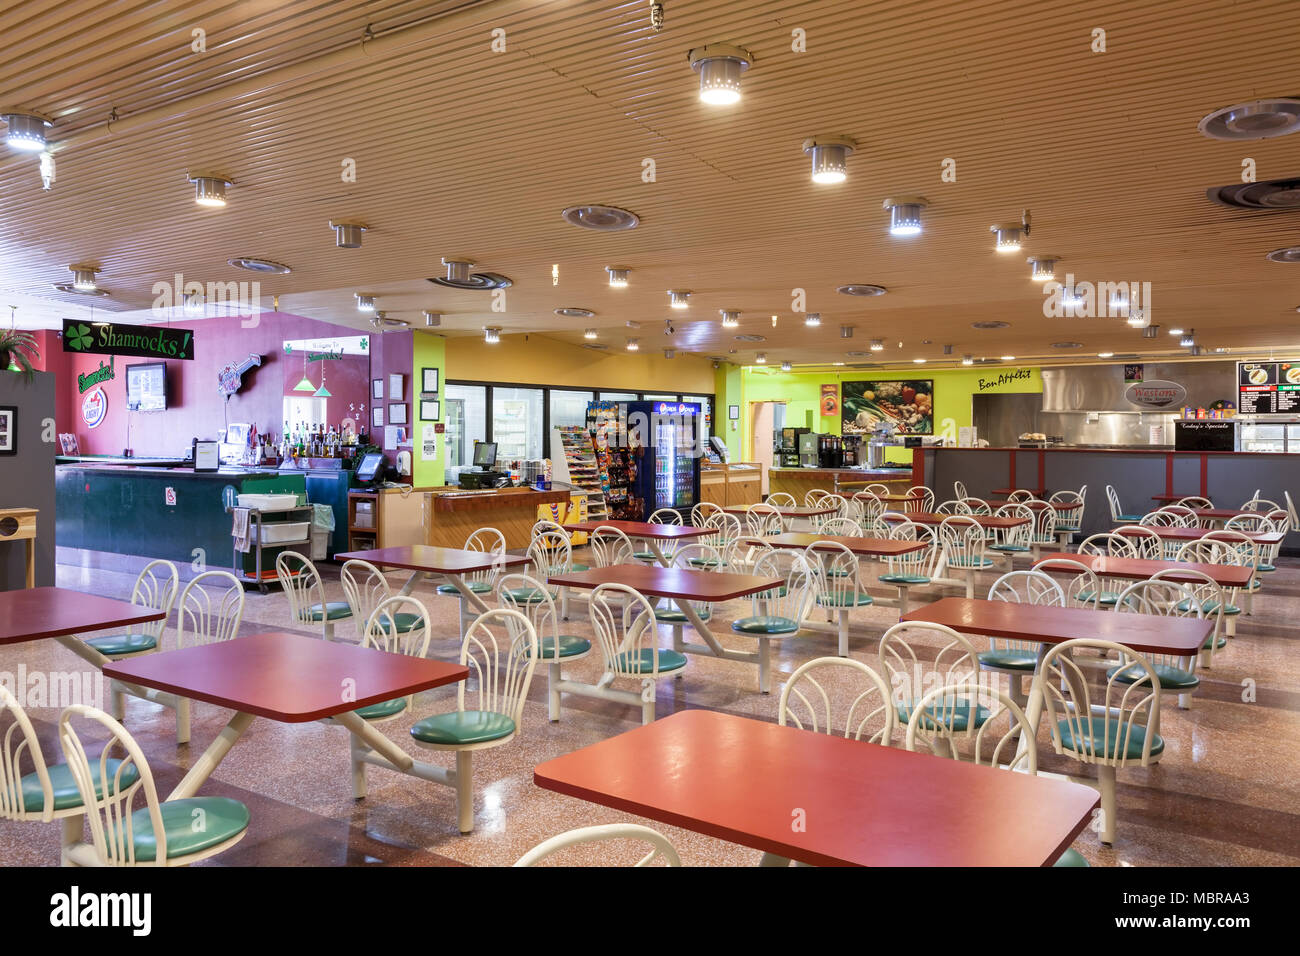 The cafeteria at Gander International Airport in Gander, Newfoundland, Canada. Stock Photo